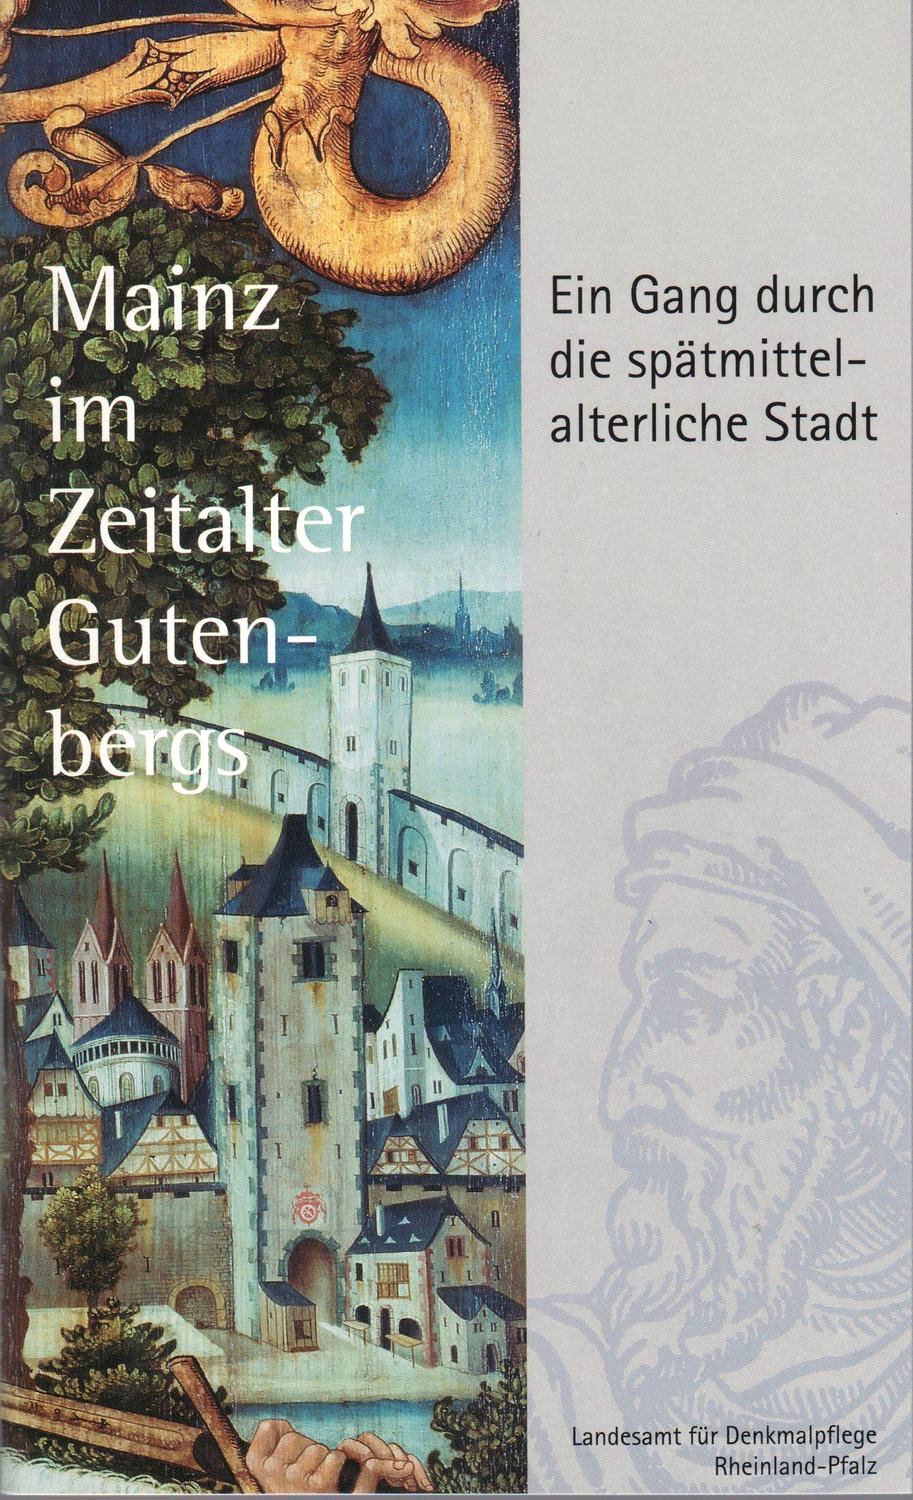  Preßler: Mainz im Zeitalter Gutenbergs